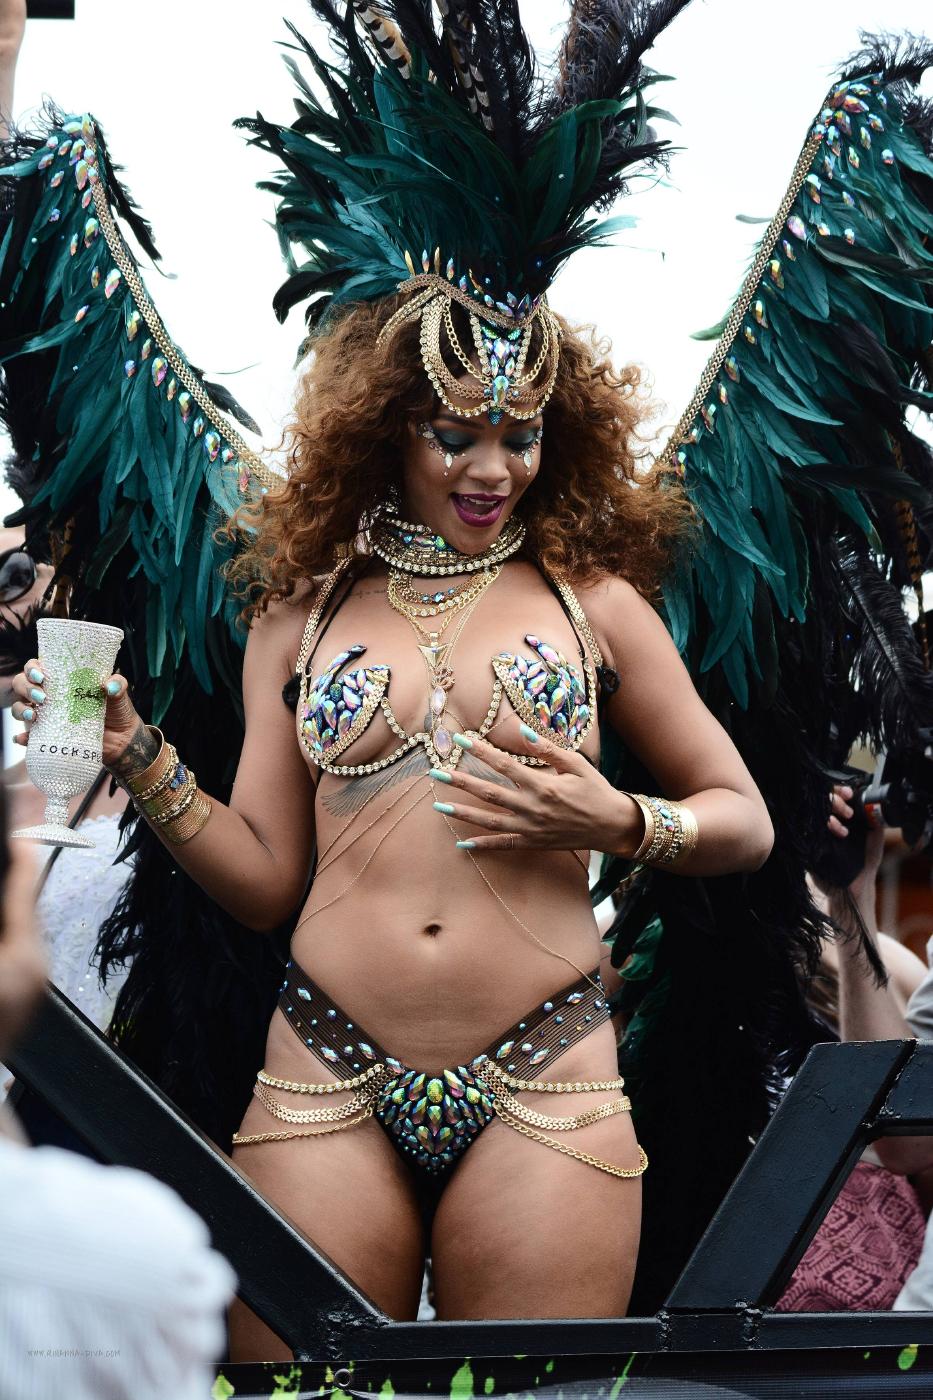 Rihanna Nip Slip Public Bikini Festival Photos Leaked 33